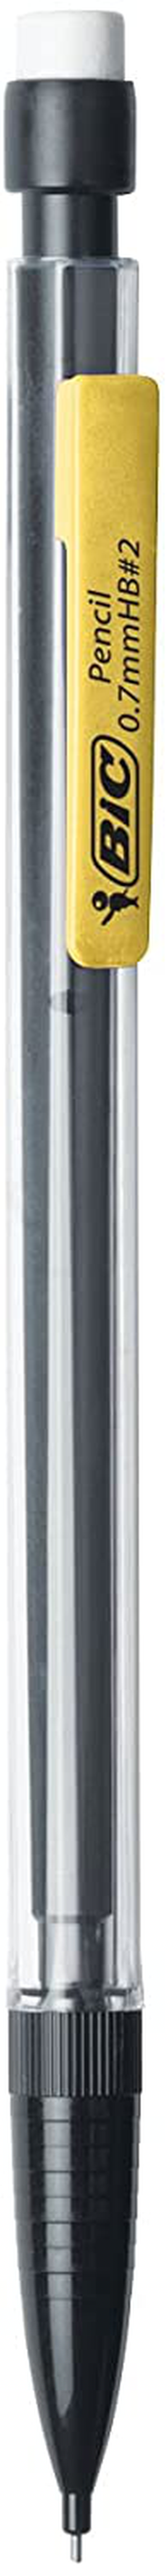 BIC Xtra-Smooth Mechanical Pencil, Medium Point (0.7 mm), 40-Count , Black